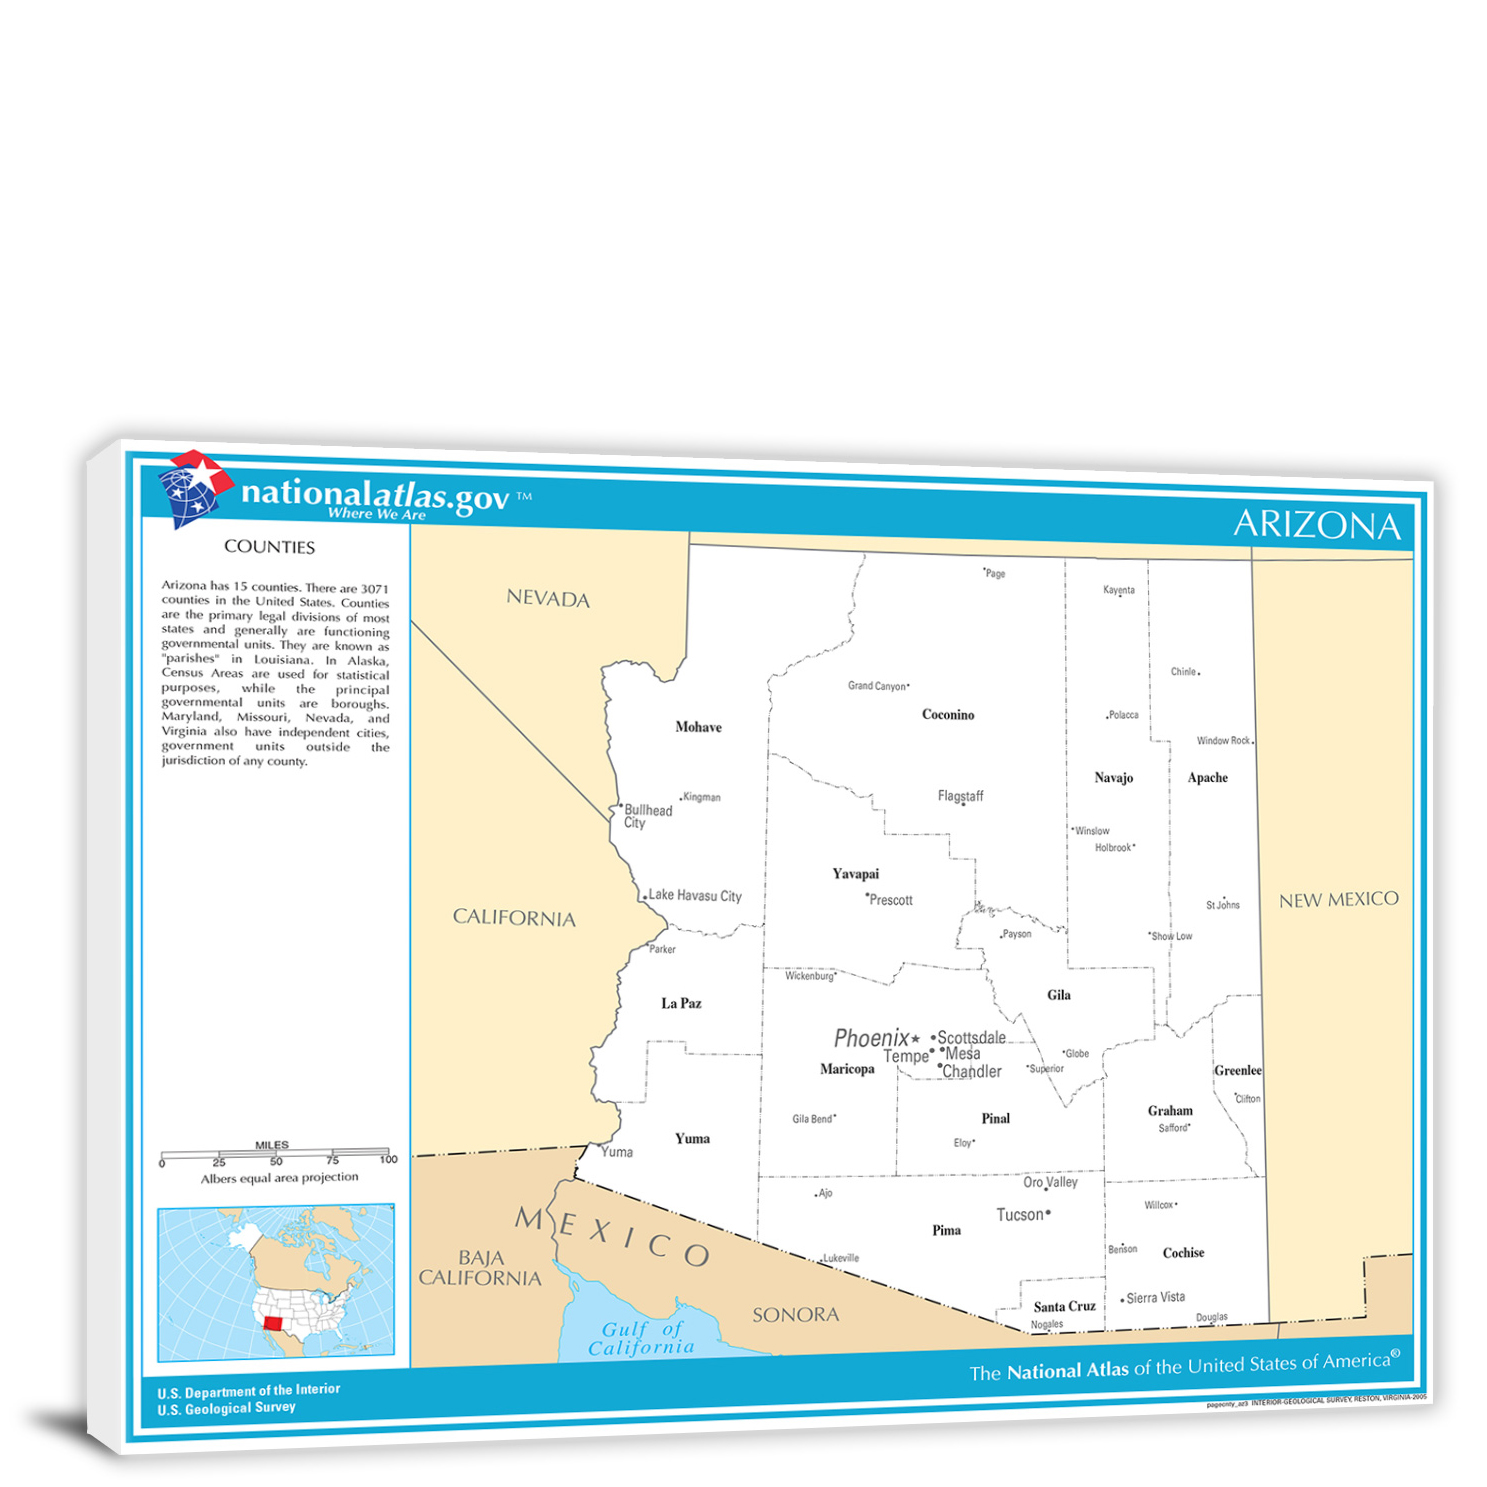 CWA268 Arizona National Atlas Counties And Selected Cities Map 00 